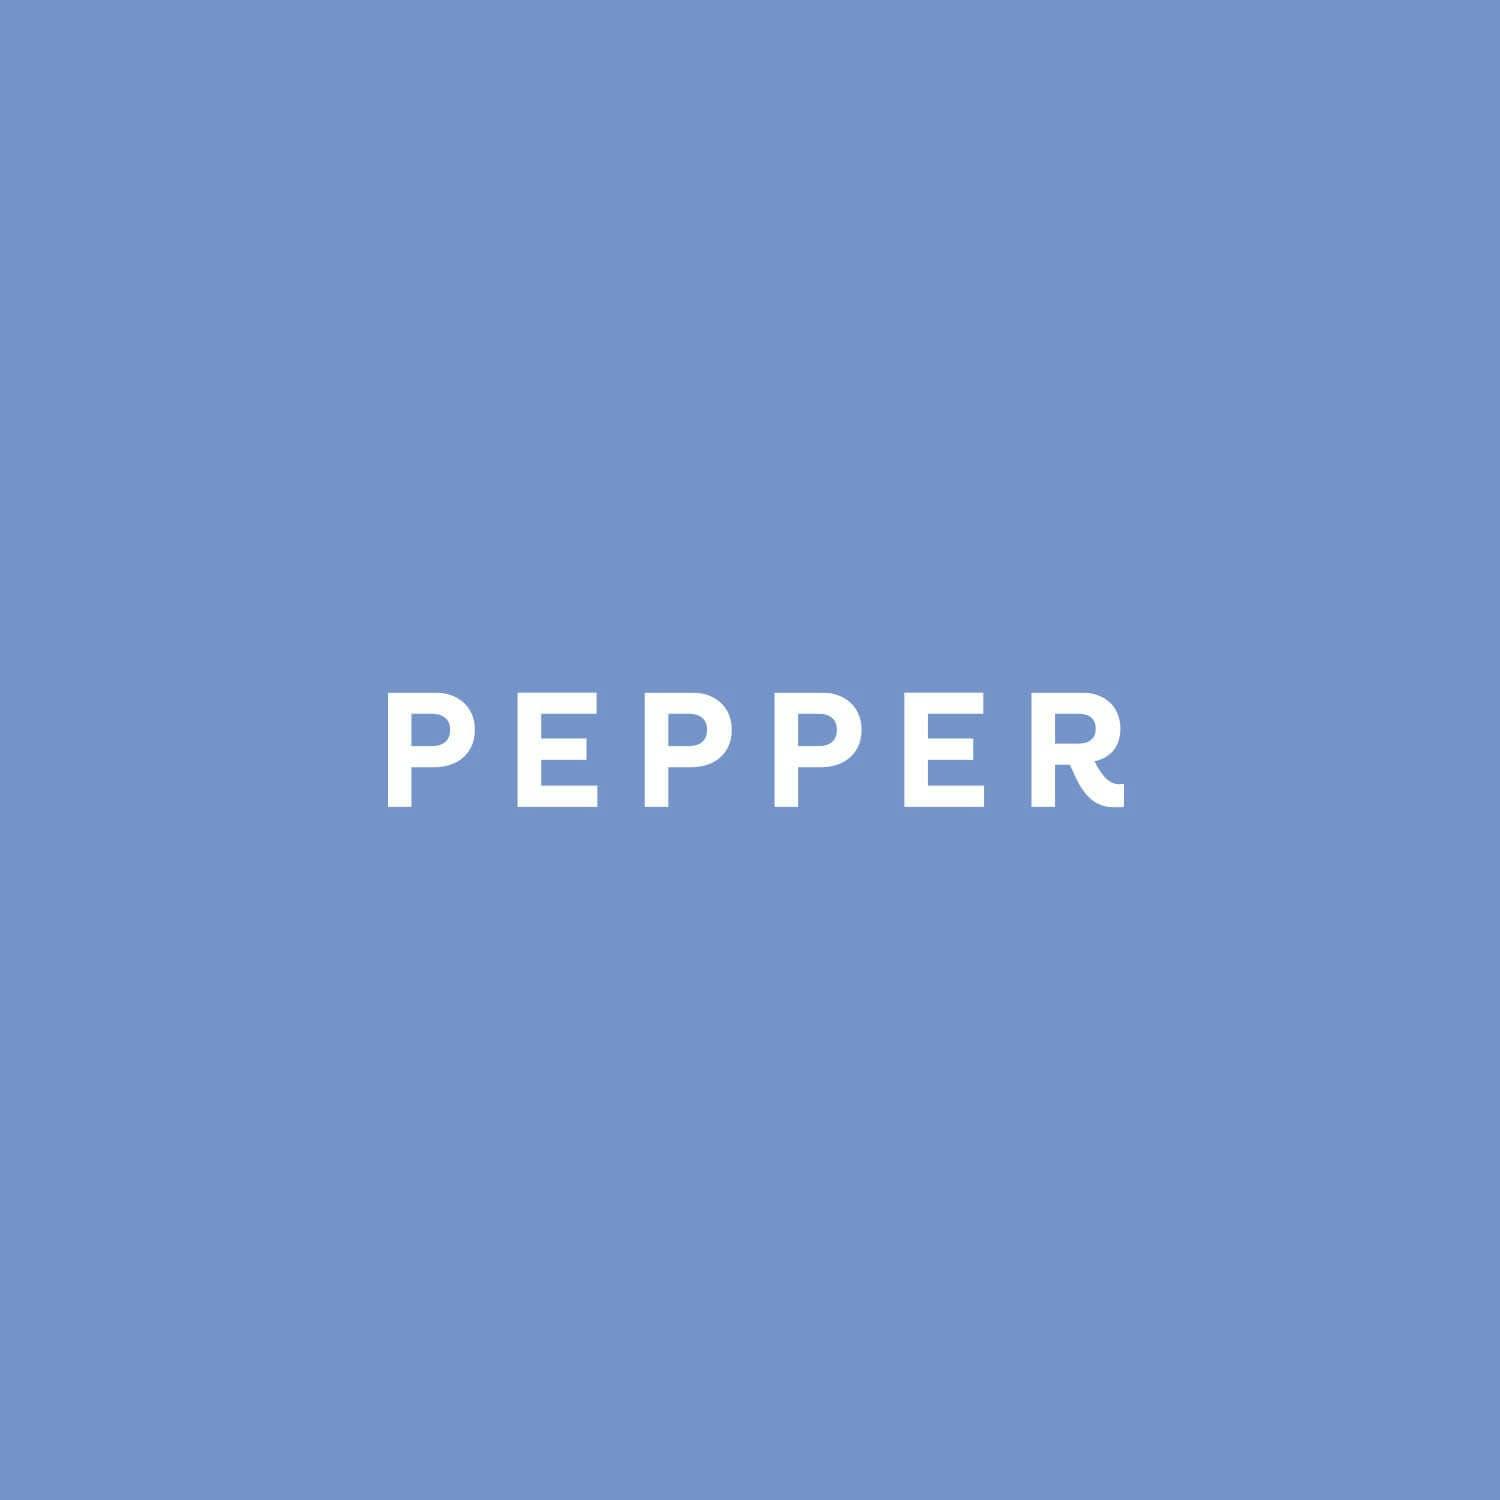  Pepper - Wordmark and Brand Identity